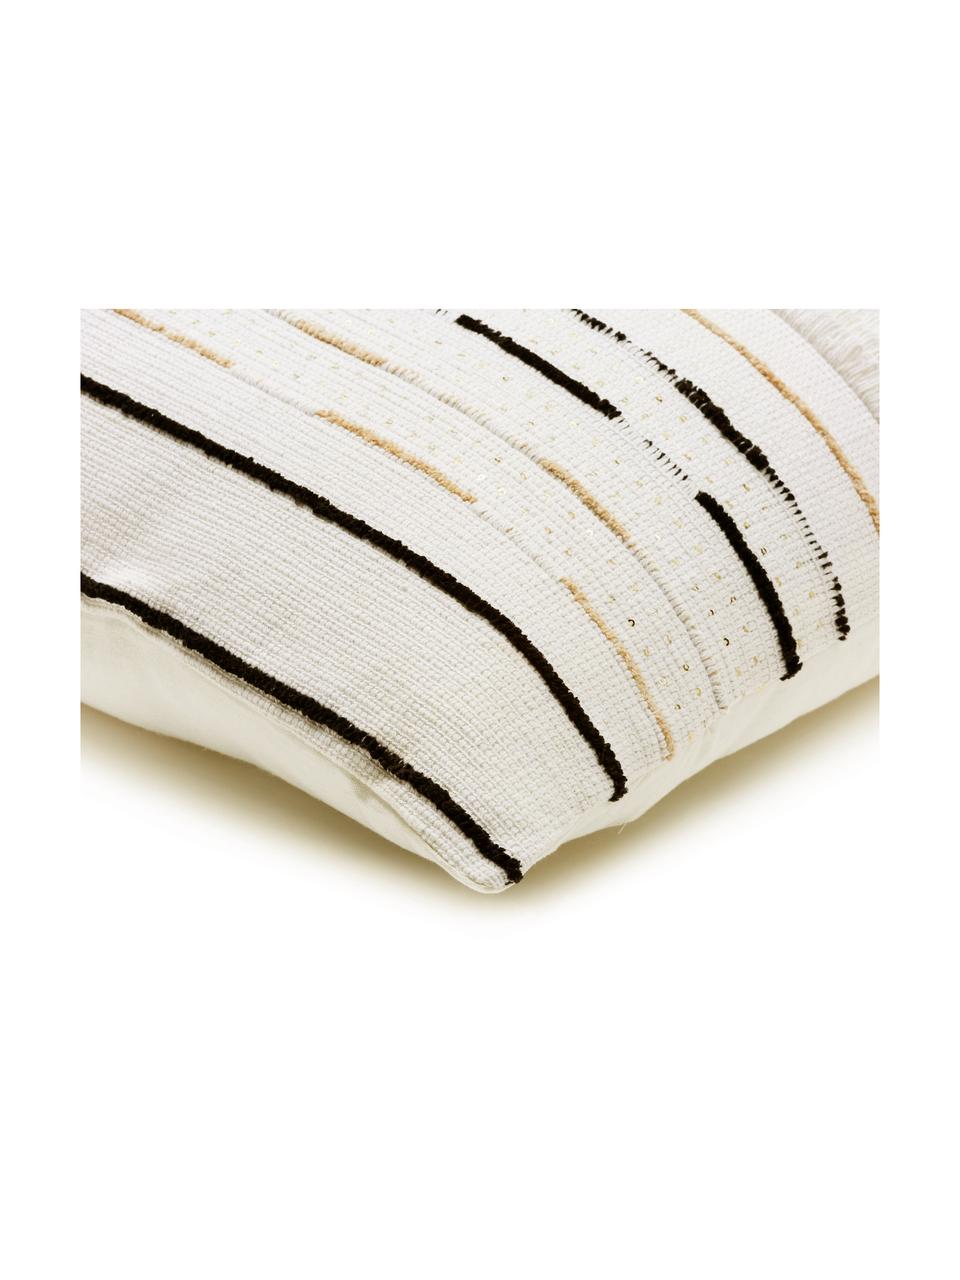 Cojín con lentejuelas Lena, con relleno, Funda: algodón Relleno poliéster, Blanco, negro, beige claro, An 60 x L 60 cm